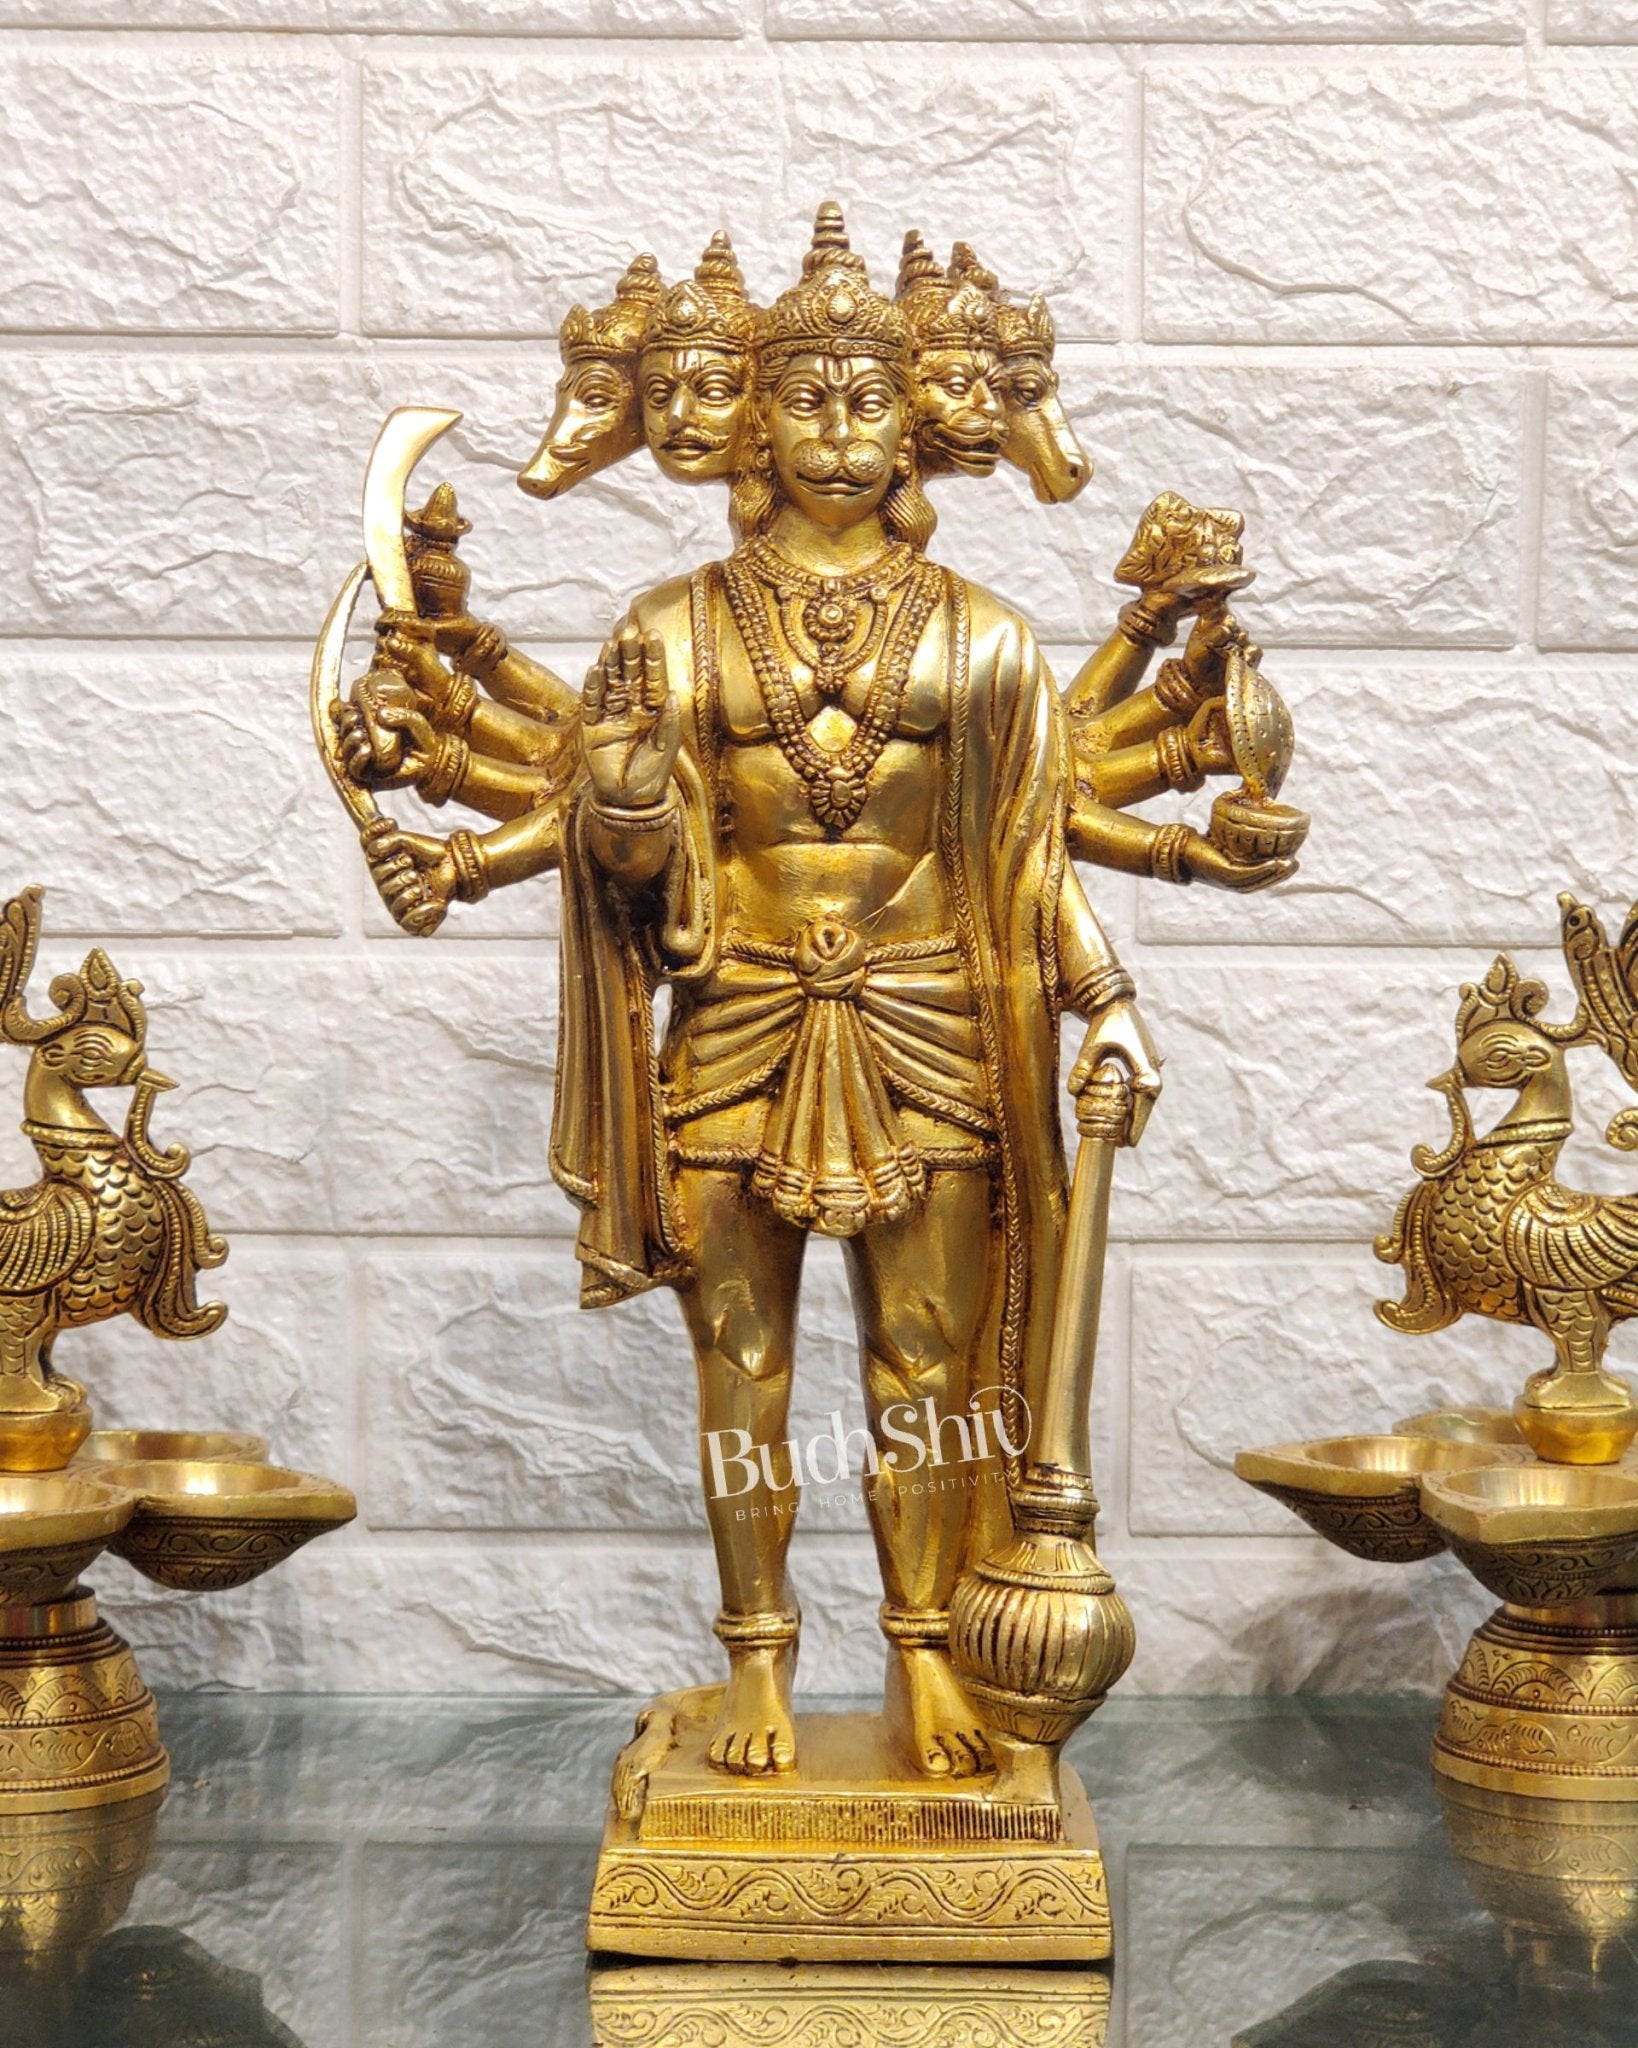 Buy Superfine Brass Panchmukhi Hanuman idol, Standing Tall